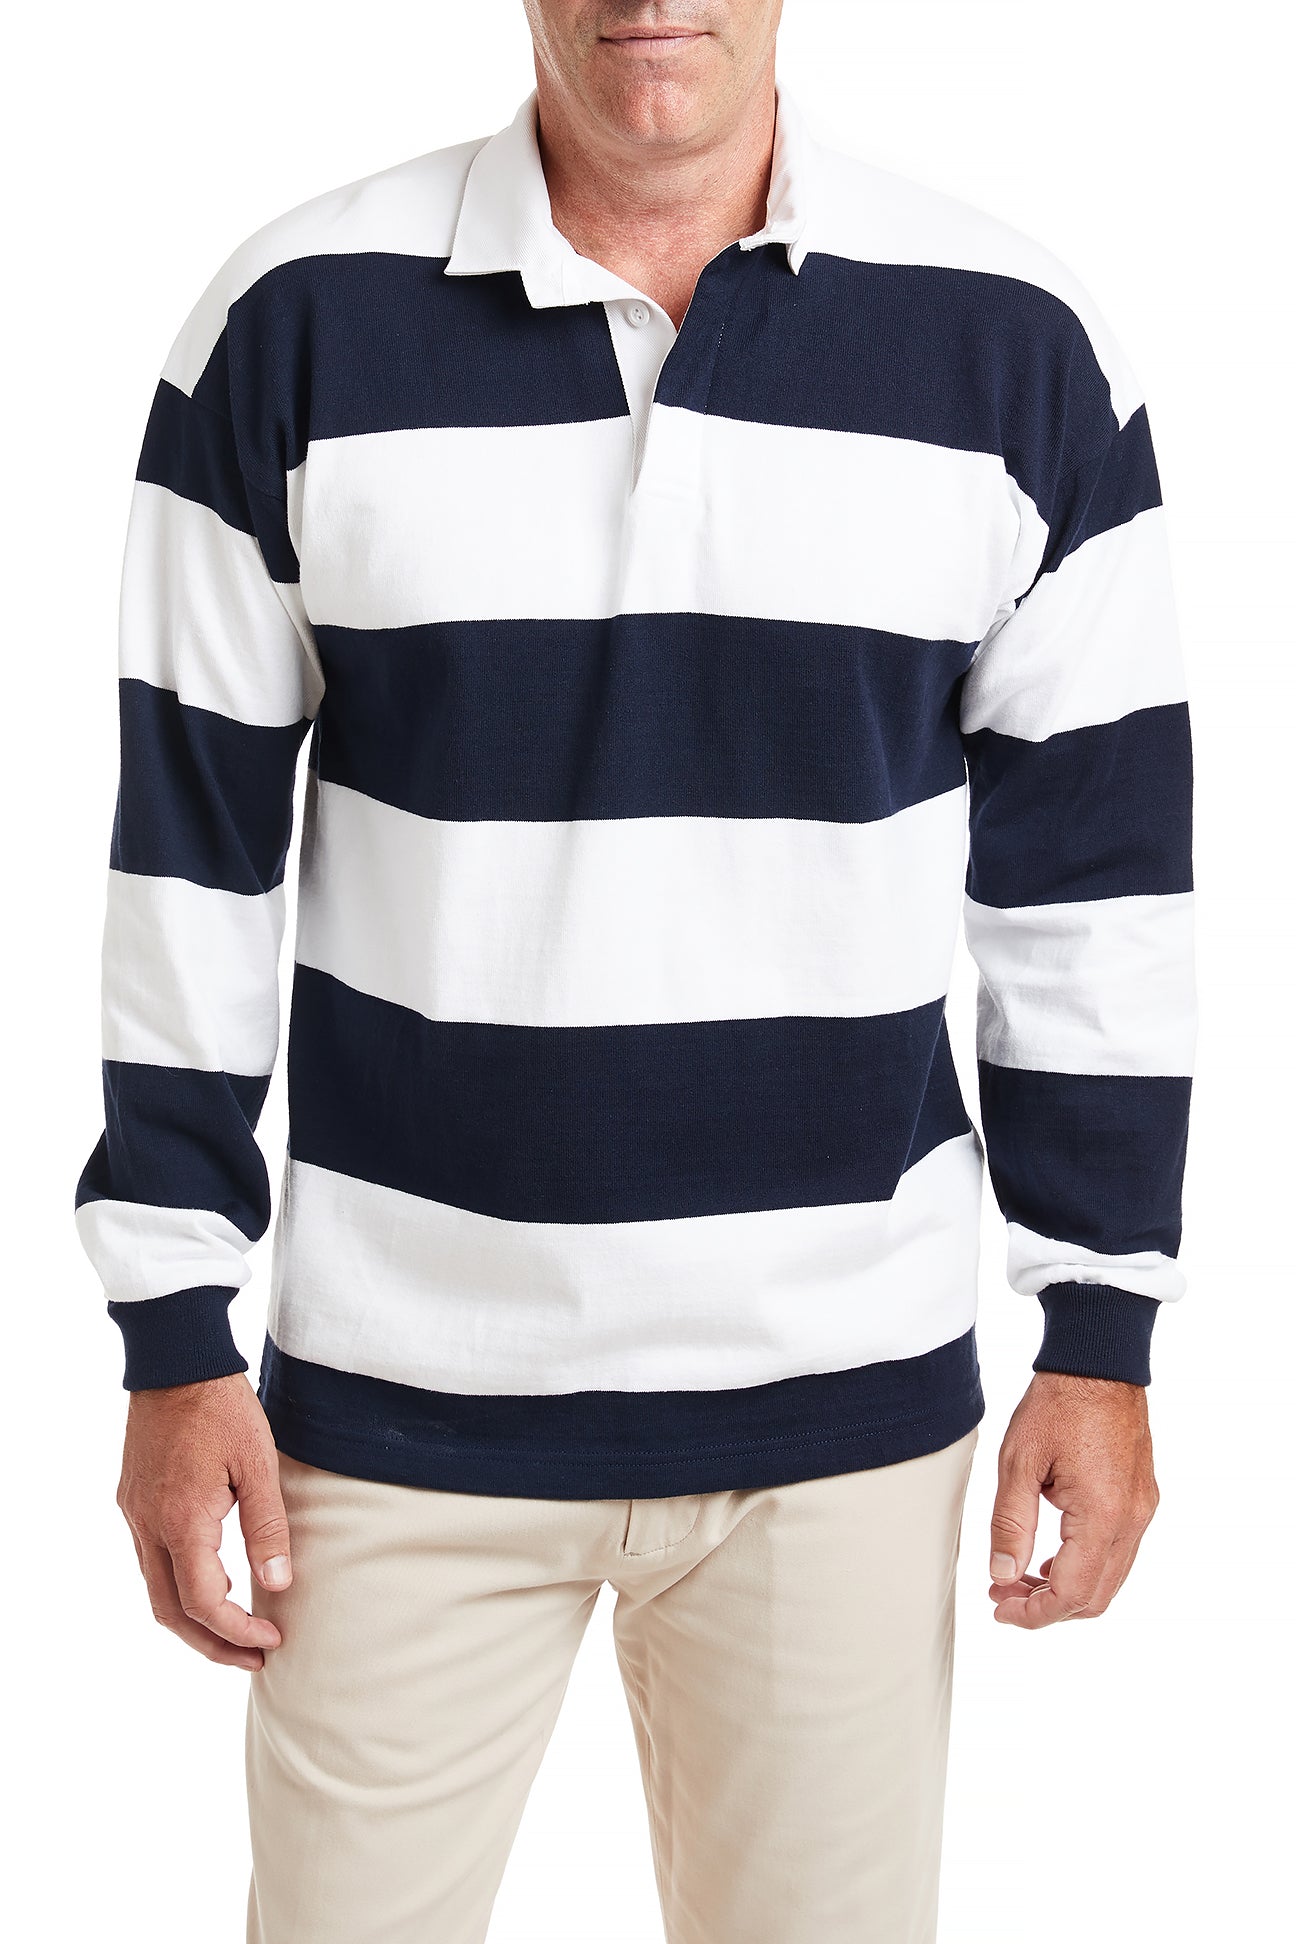 Castaway Rugby Shirt Navy & White Stripe POLOS & TEES Castaway Nantucket Island